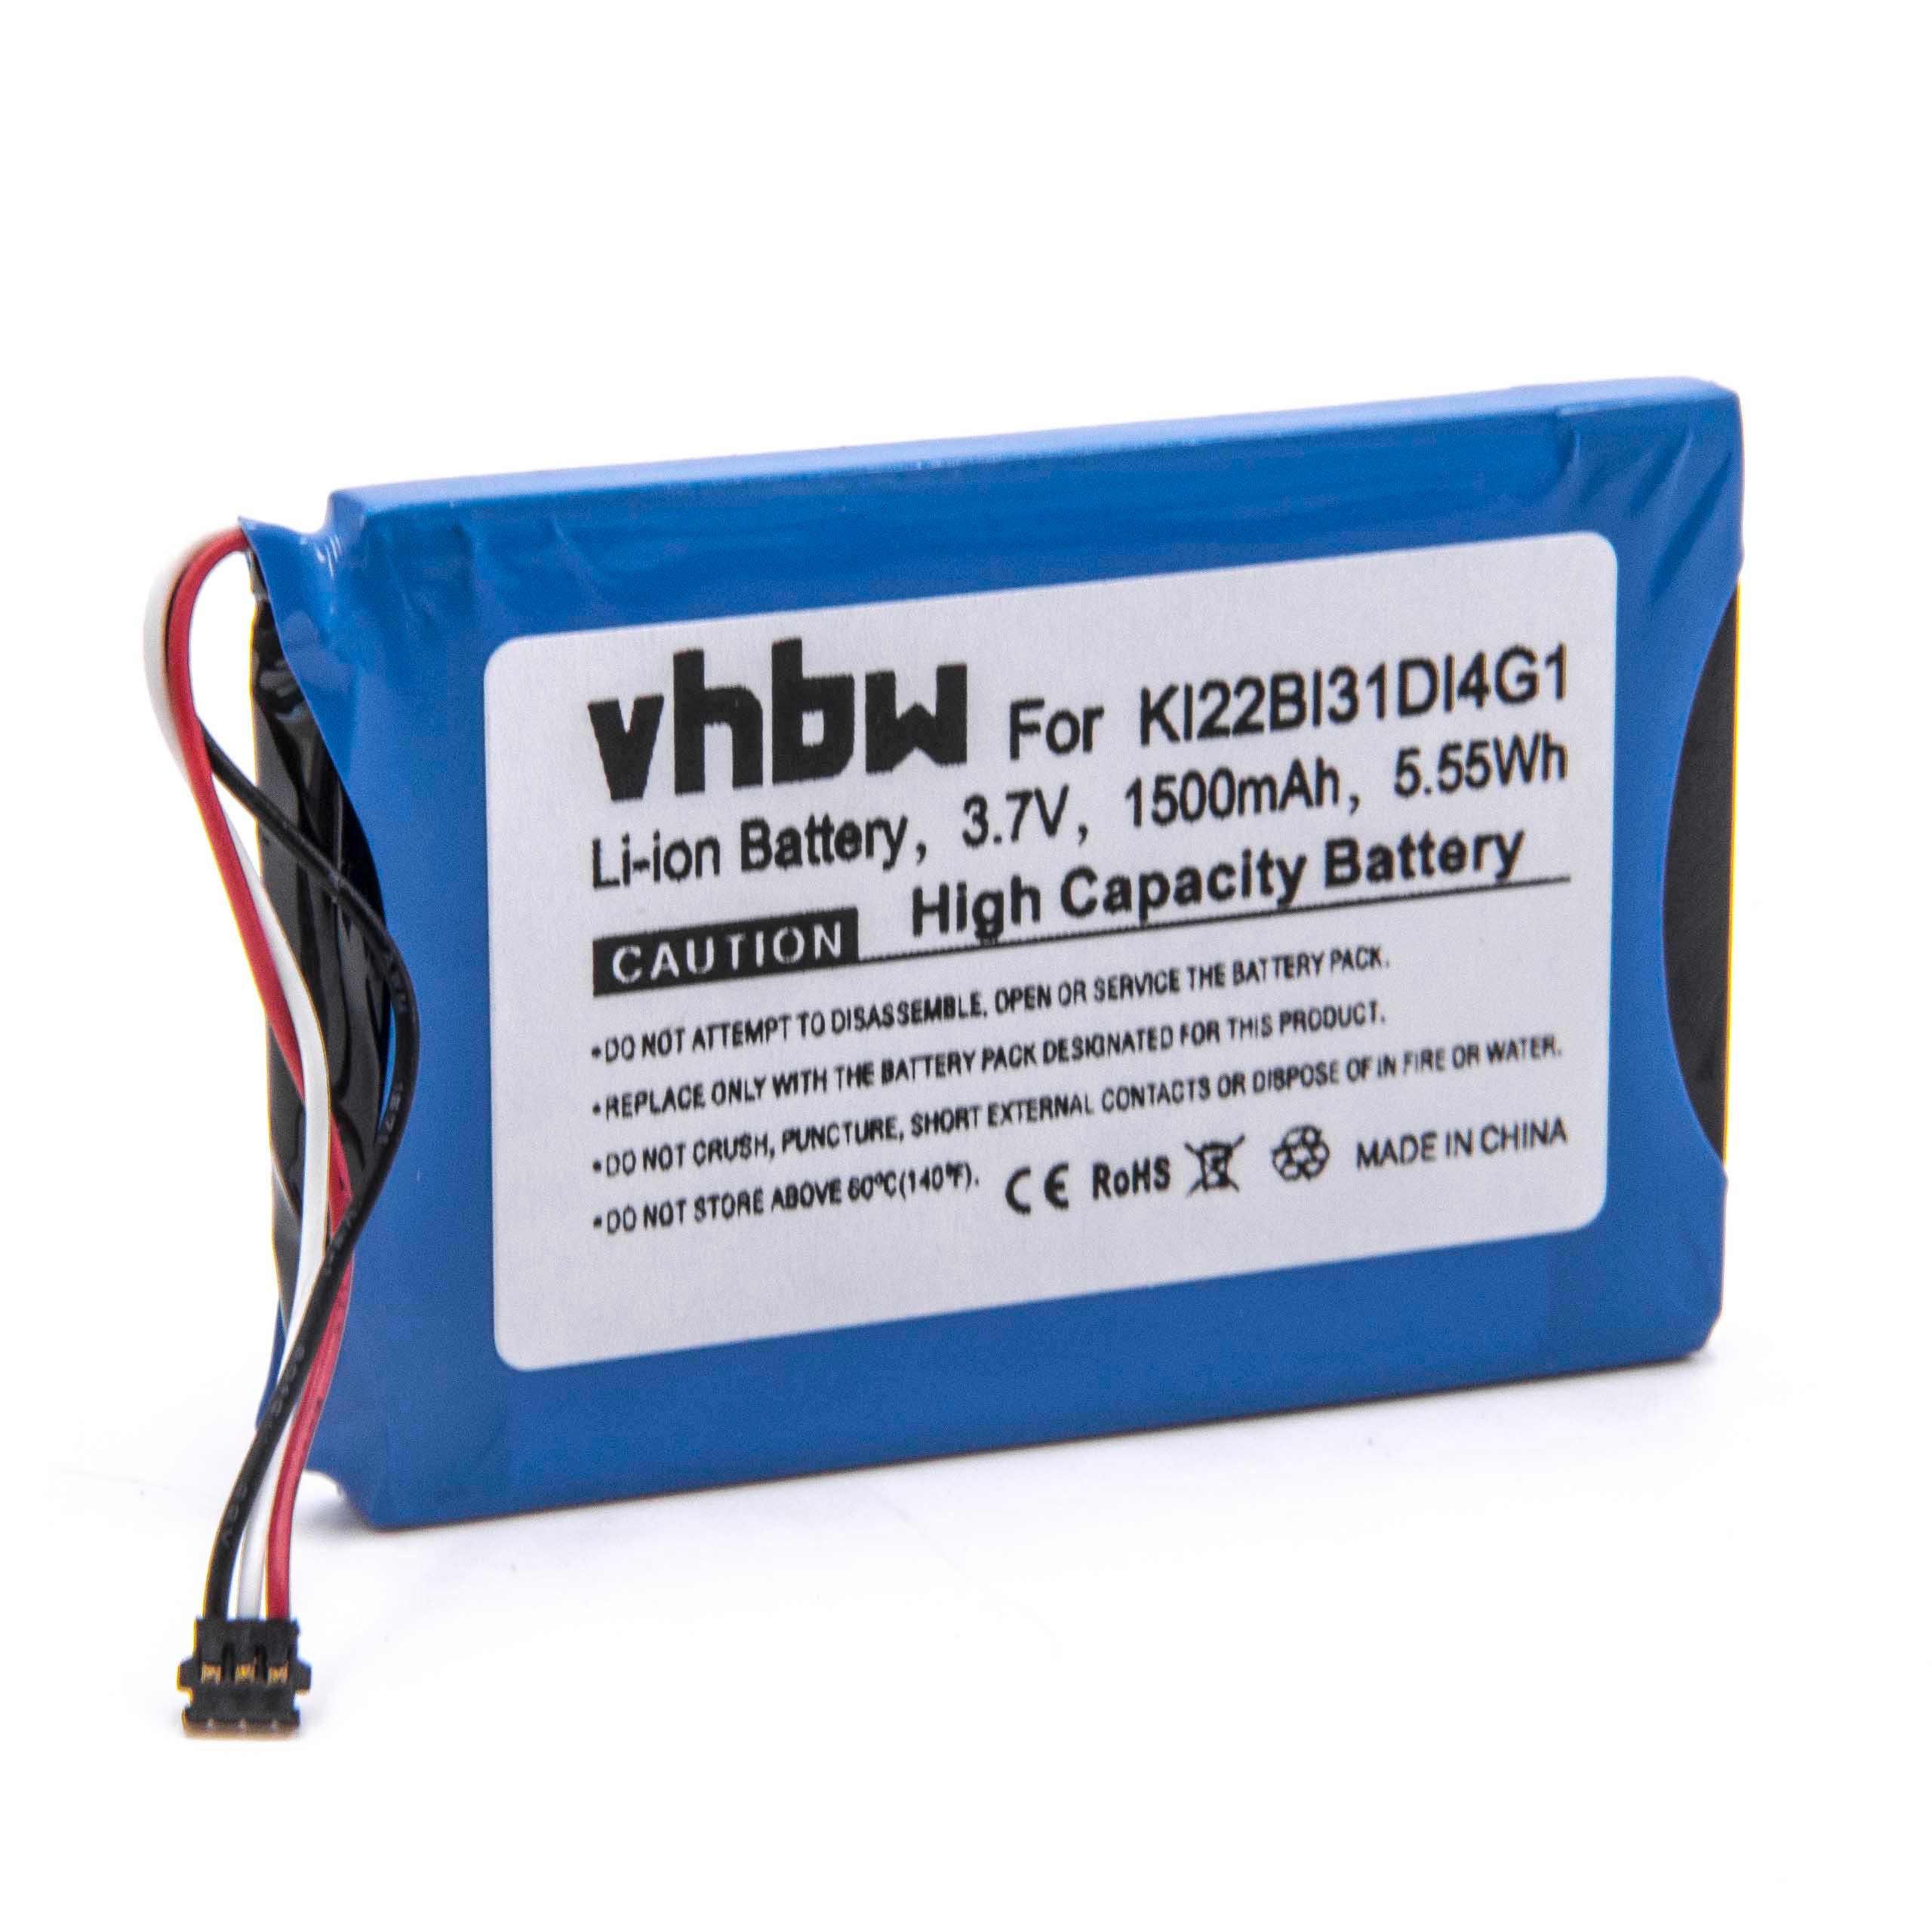 Batteria sostituisce Garmin KI22BI31DI4G1 per navigatore Garmin - 1500mAh 3,7V Li-Ion